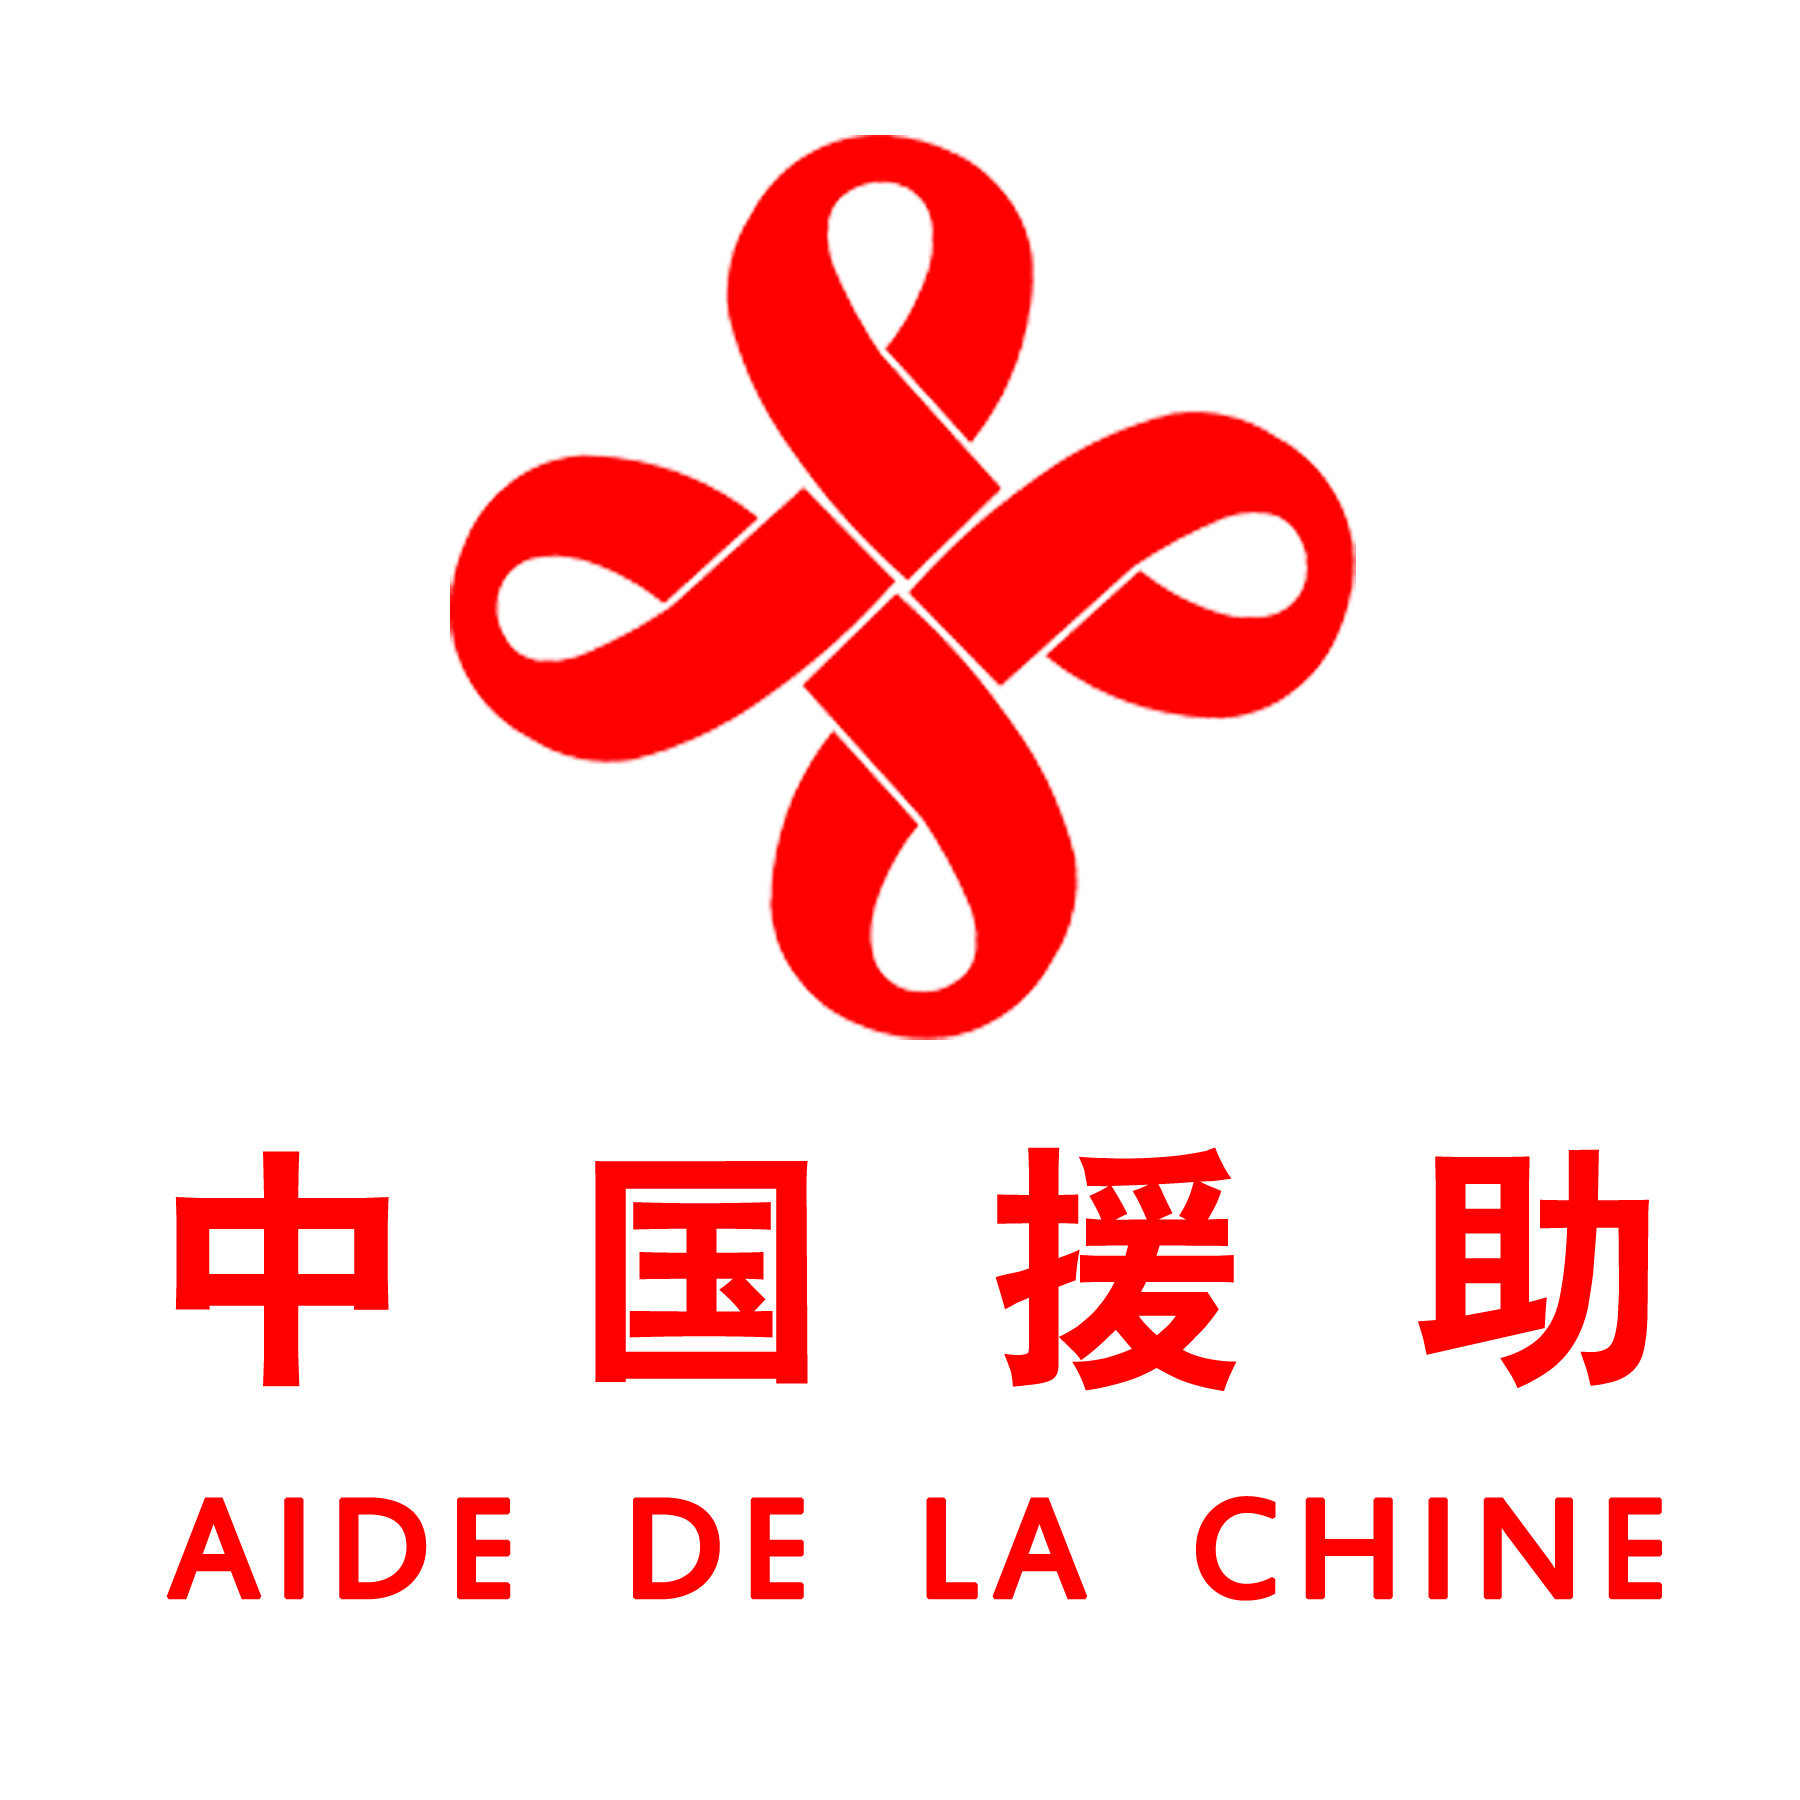 Chinese aid